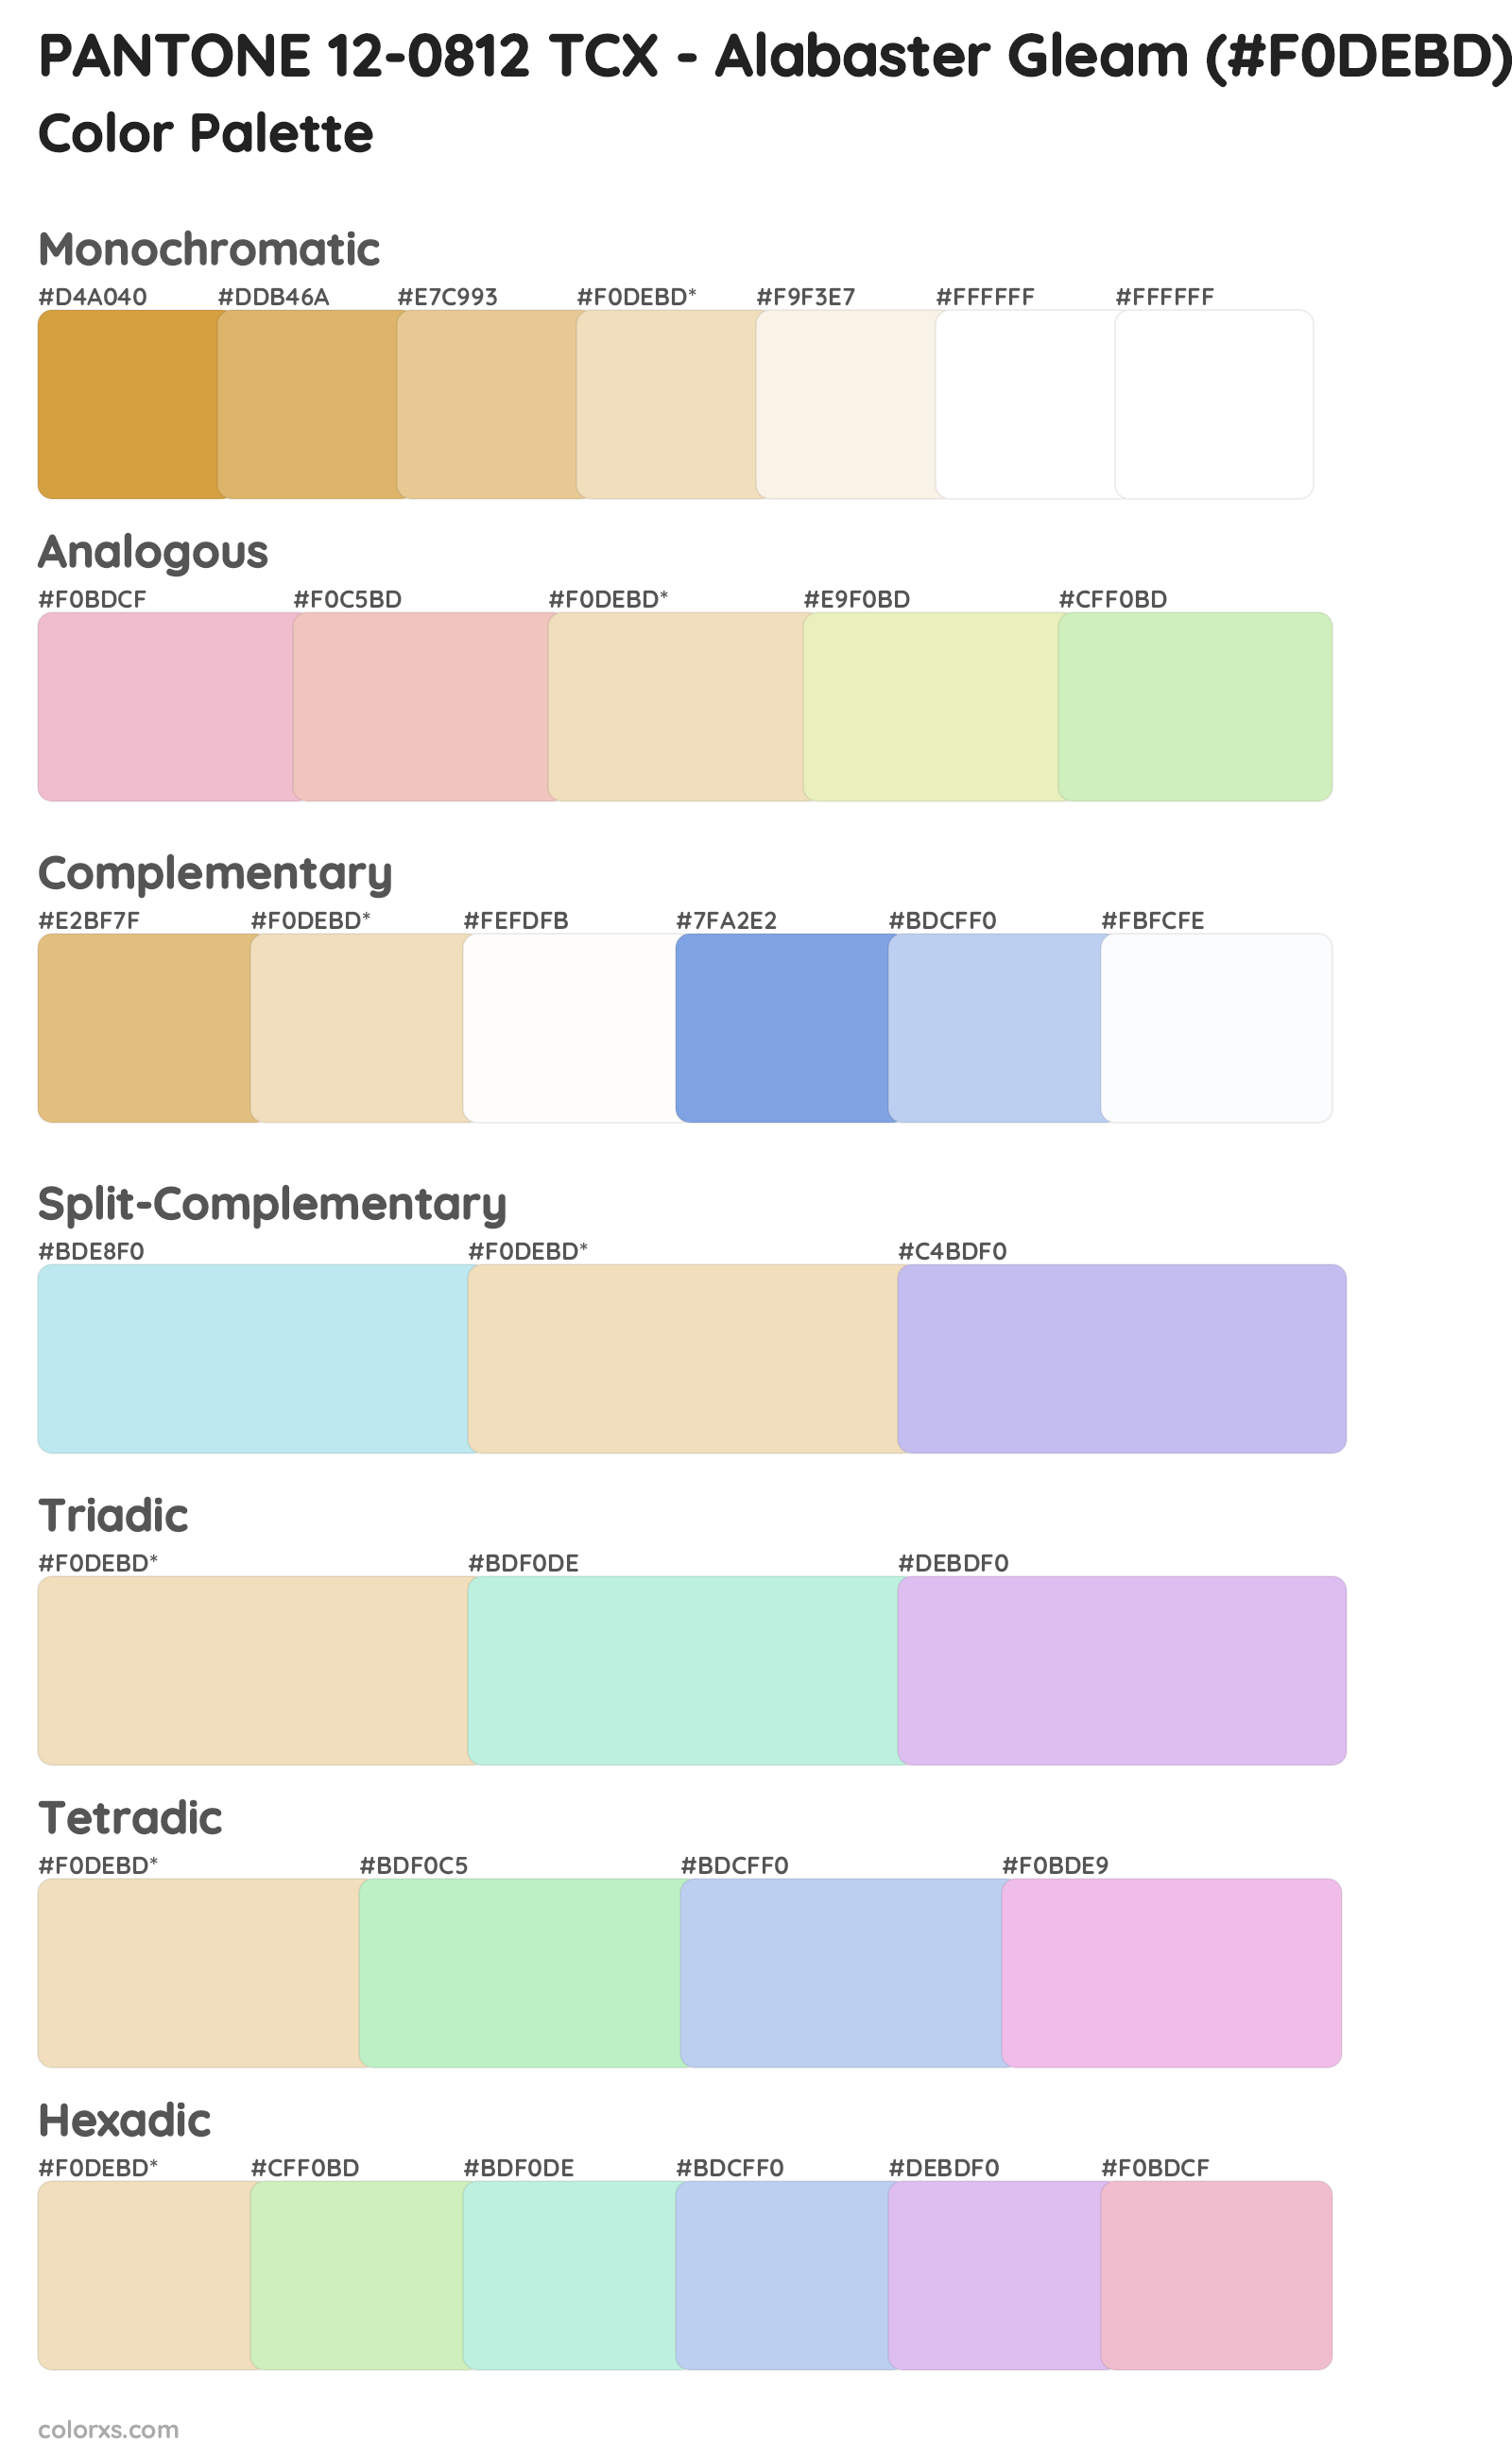 PANTONE 12-0812 TCX - Alabaster Gleam Color Scheme Palettes